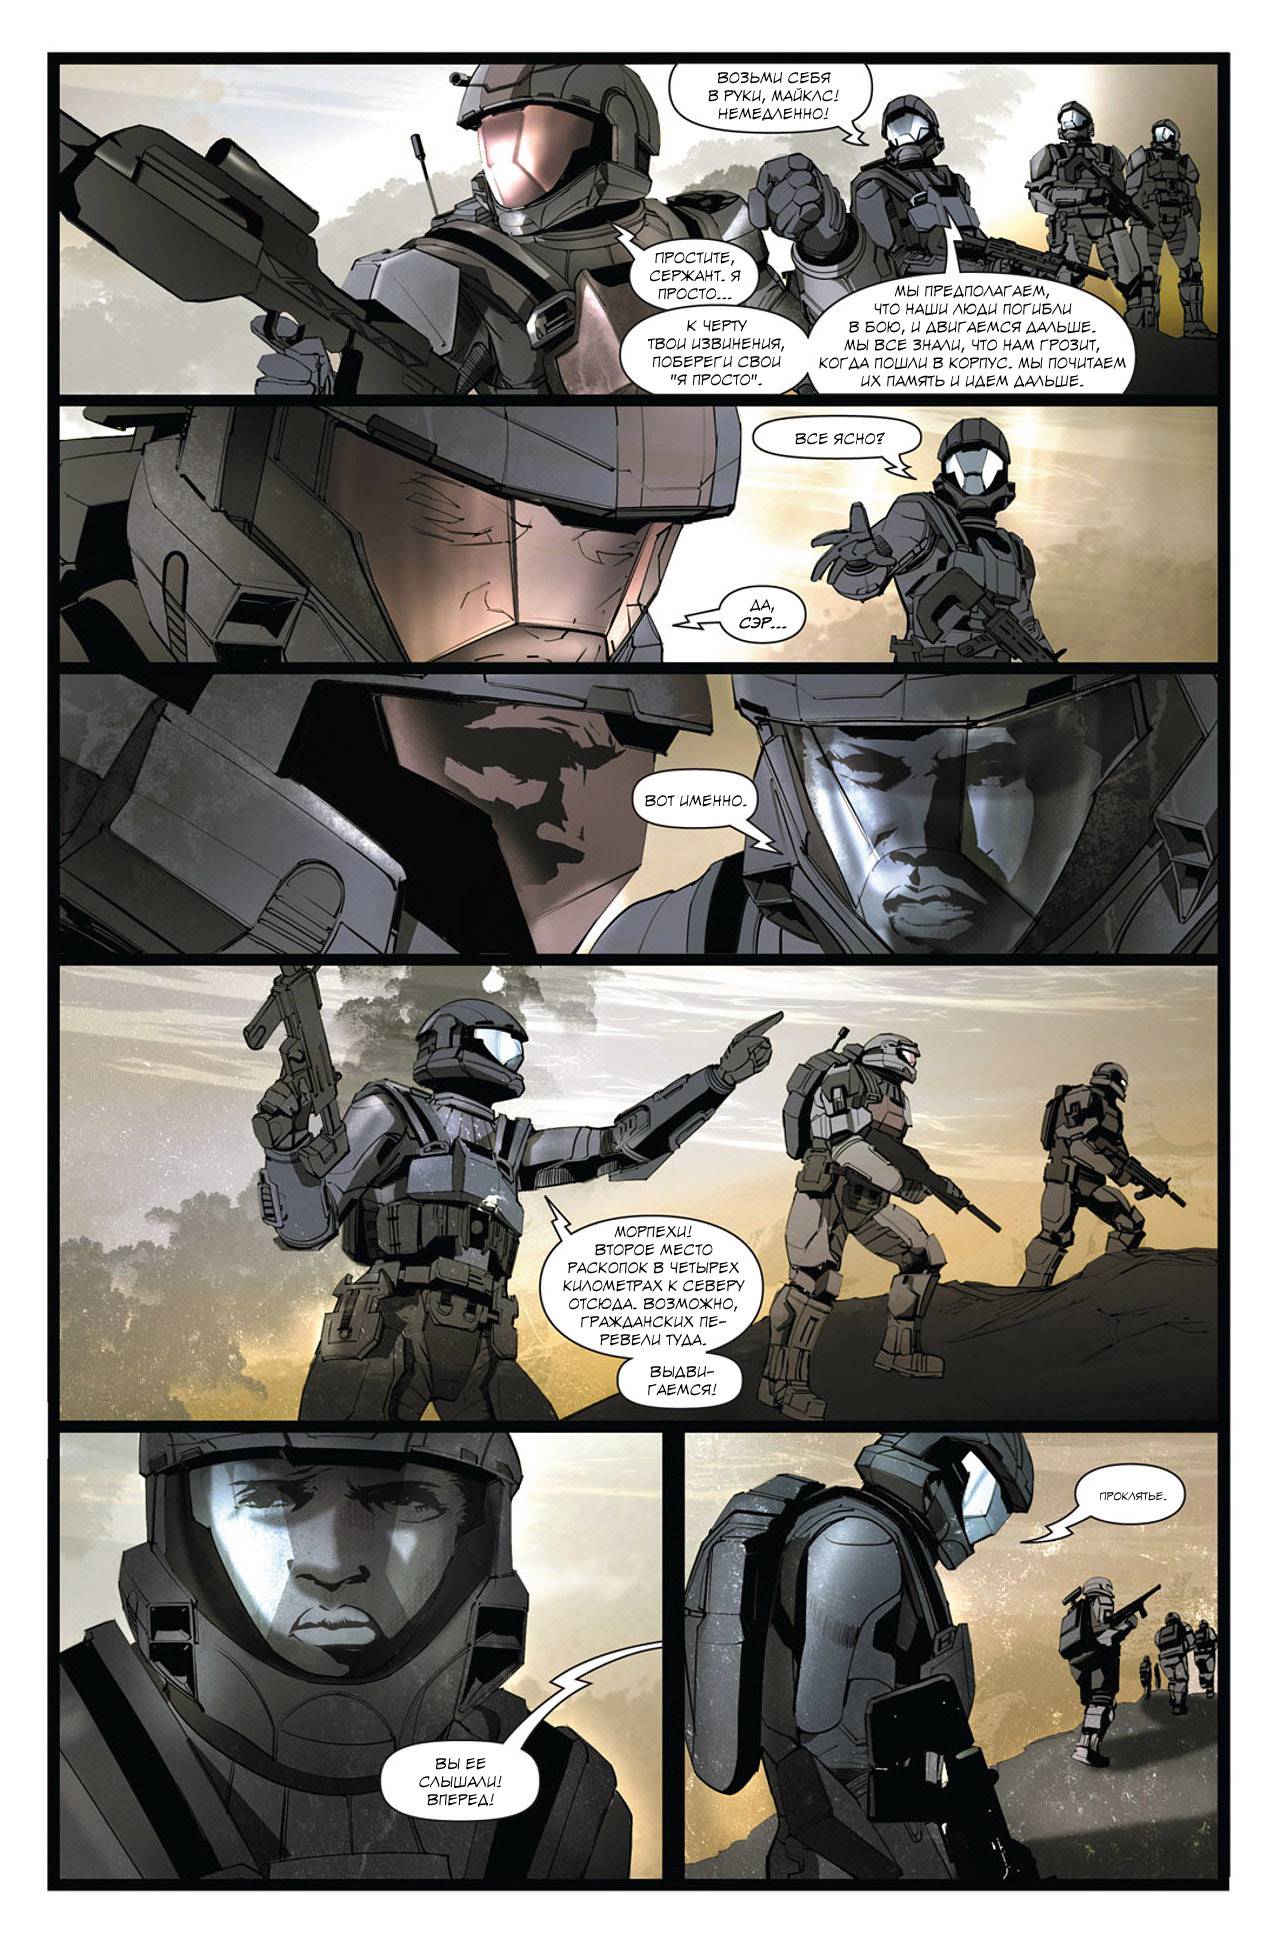 Halo: Десантники №3 онлайн